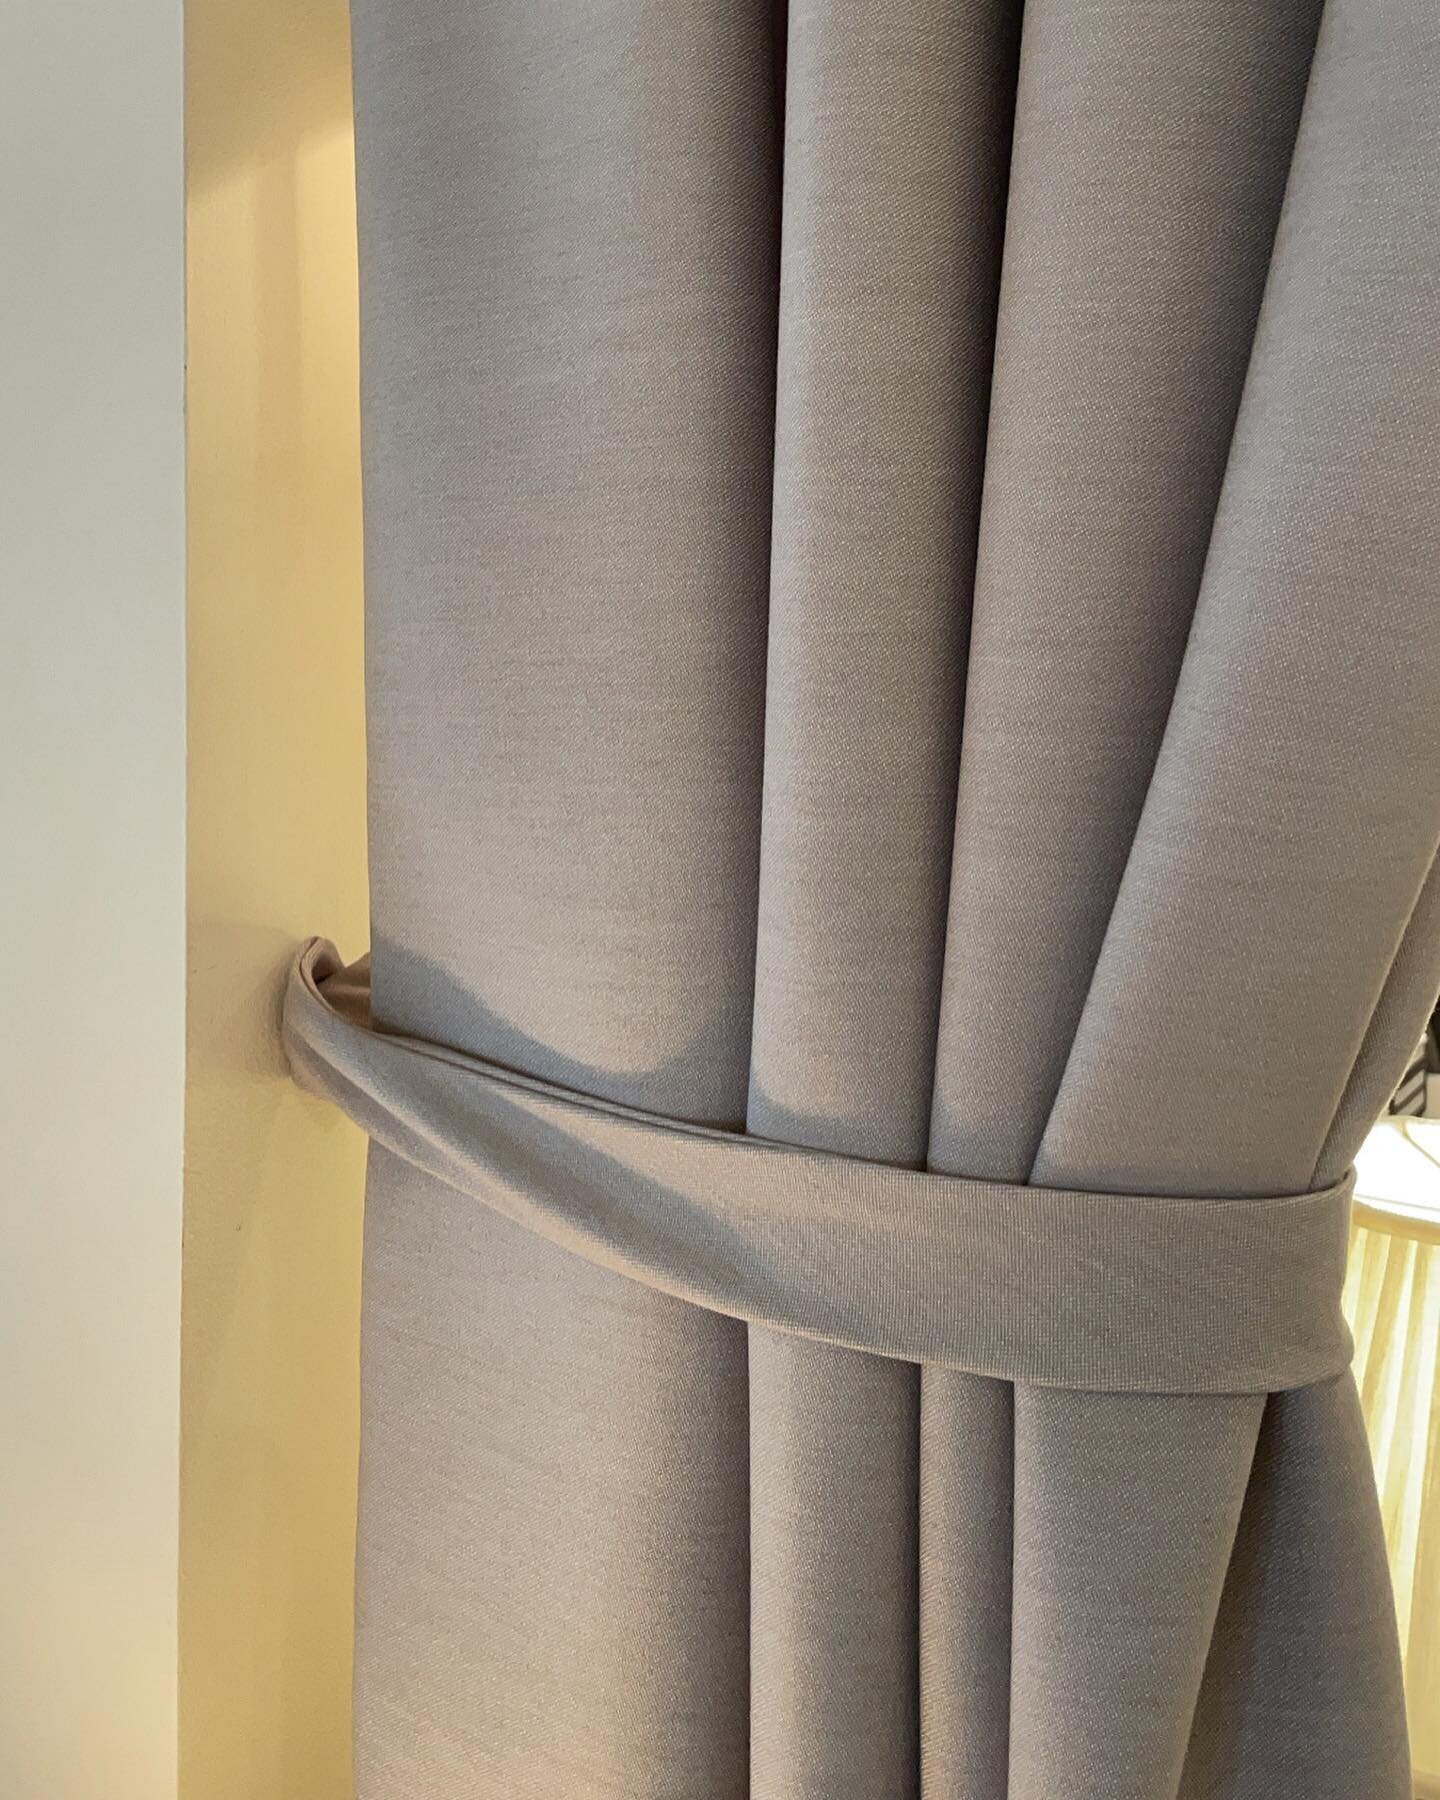 Beautiful simple tie back - it&rsquo;s all in the details&hellip; 

.
.
.

#interiors #windowtreatments #drapery #simplicity #elegance #curtains #livingroominspo #decoratingideas #decor #concept #streamlined #calm #interiorsinspo #inspiration #beauty